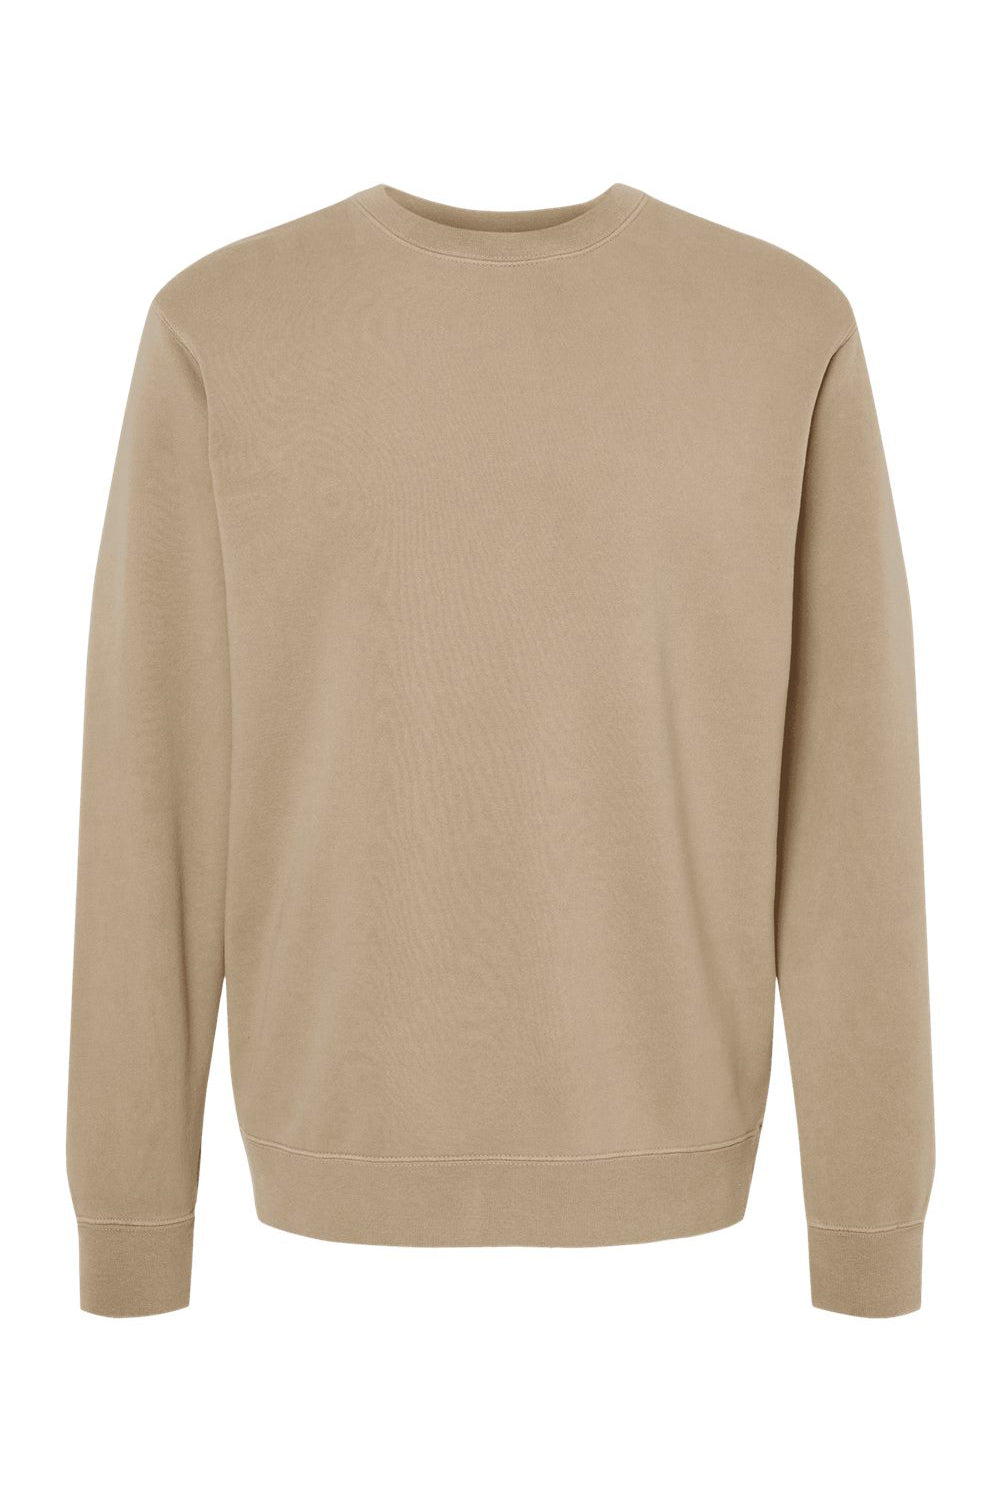 Independent Trading Co. PRM3500 Mens Pigment Dyed Crewneck Sweatshirt Sandstone Brown Flat Front